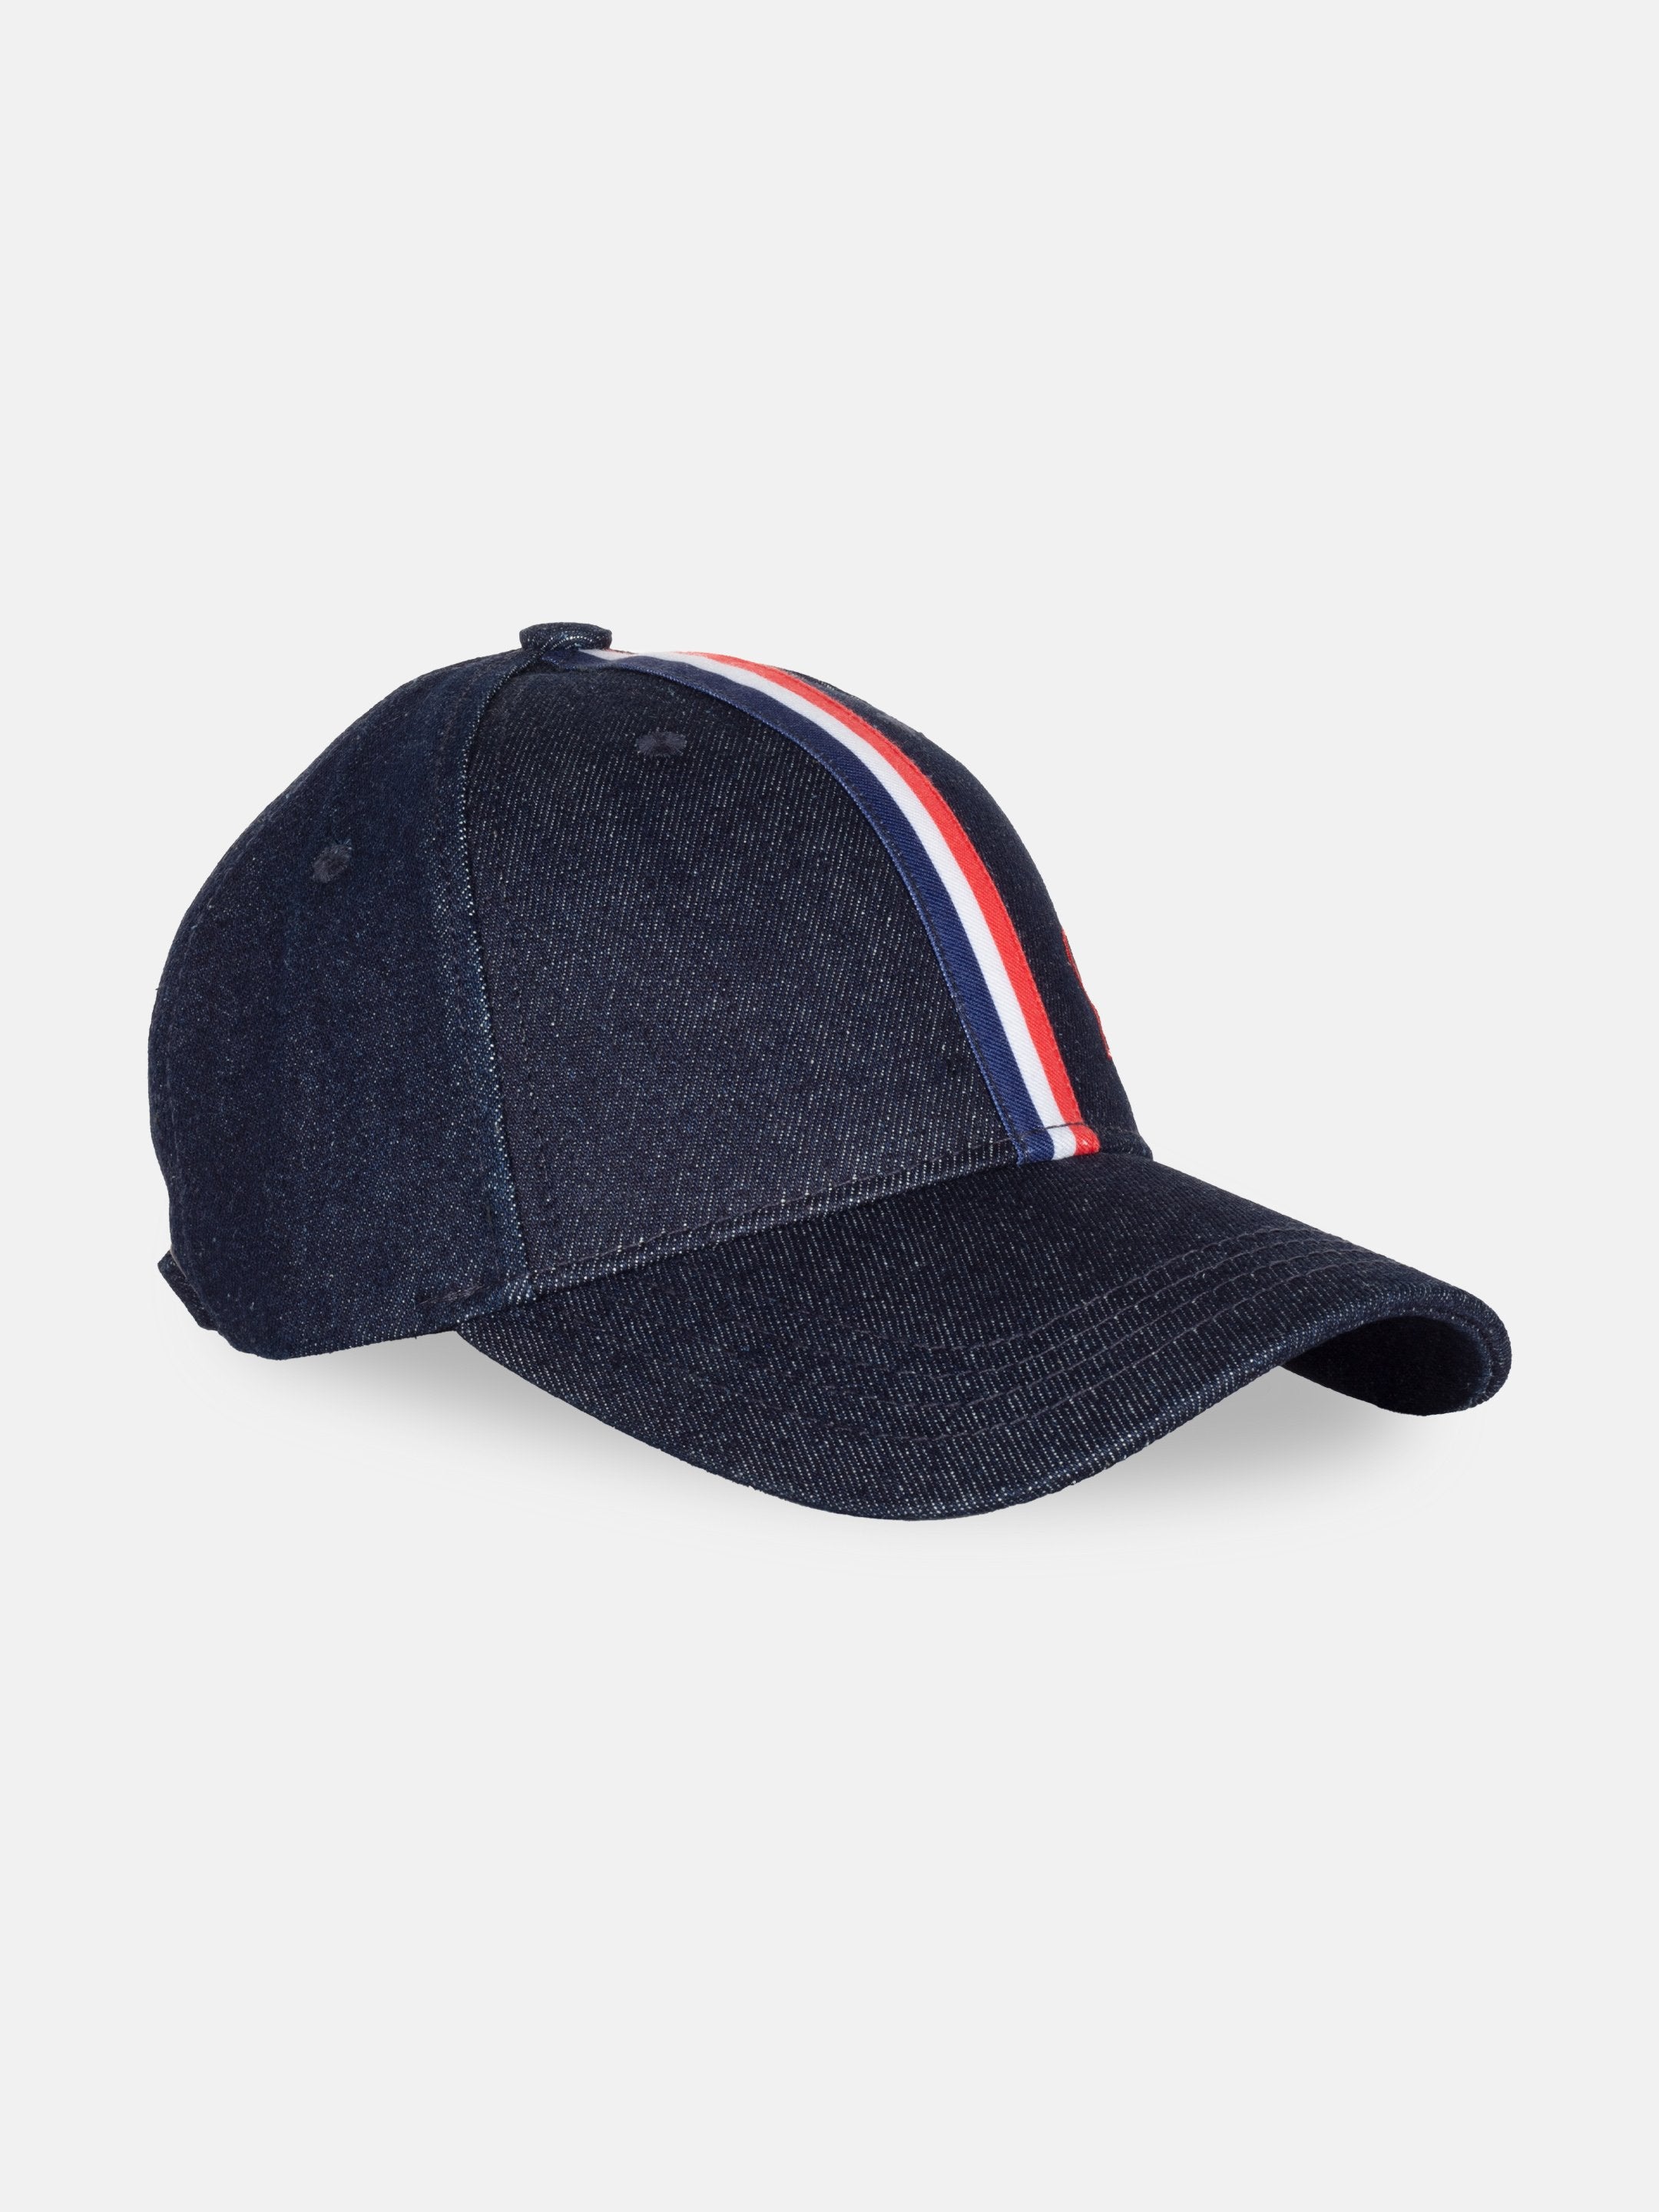 Buy Denim Cap - Summer Caps for Men